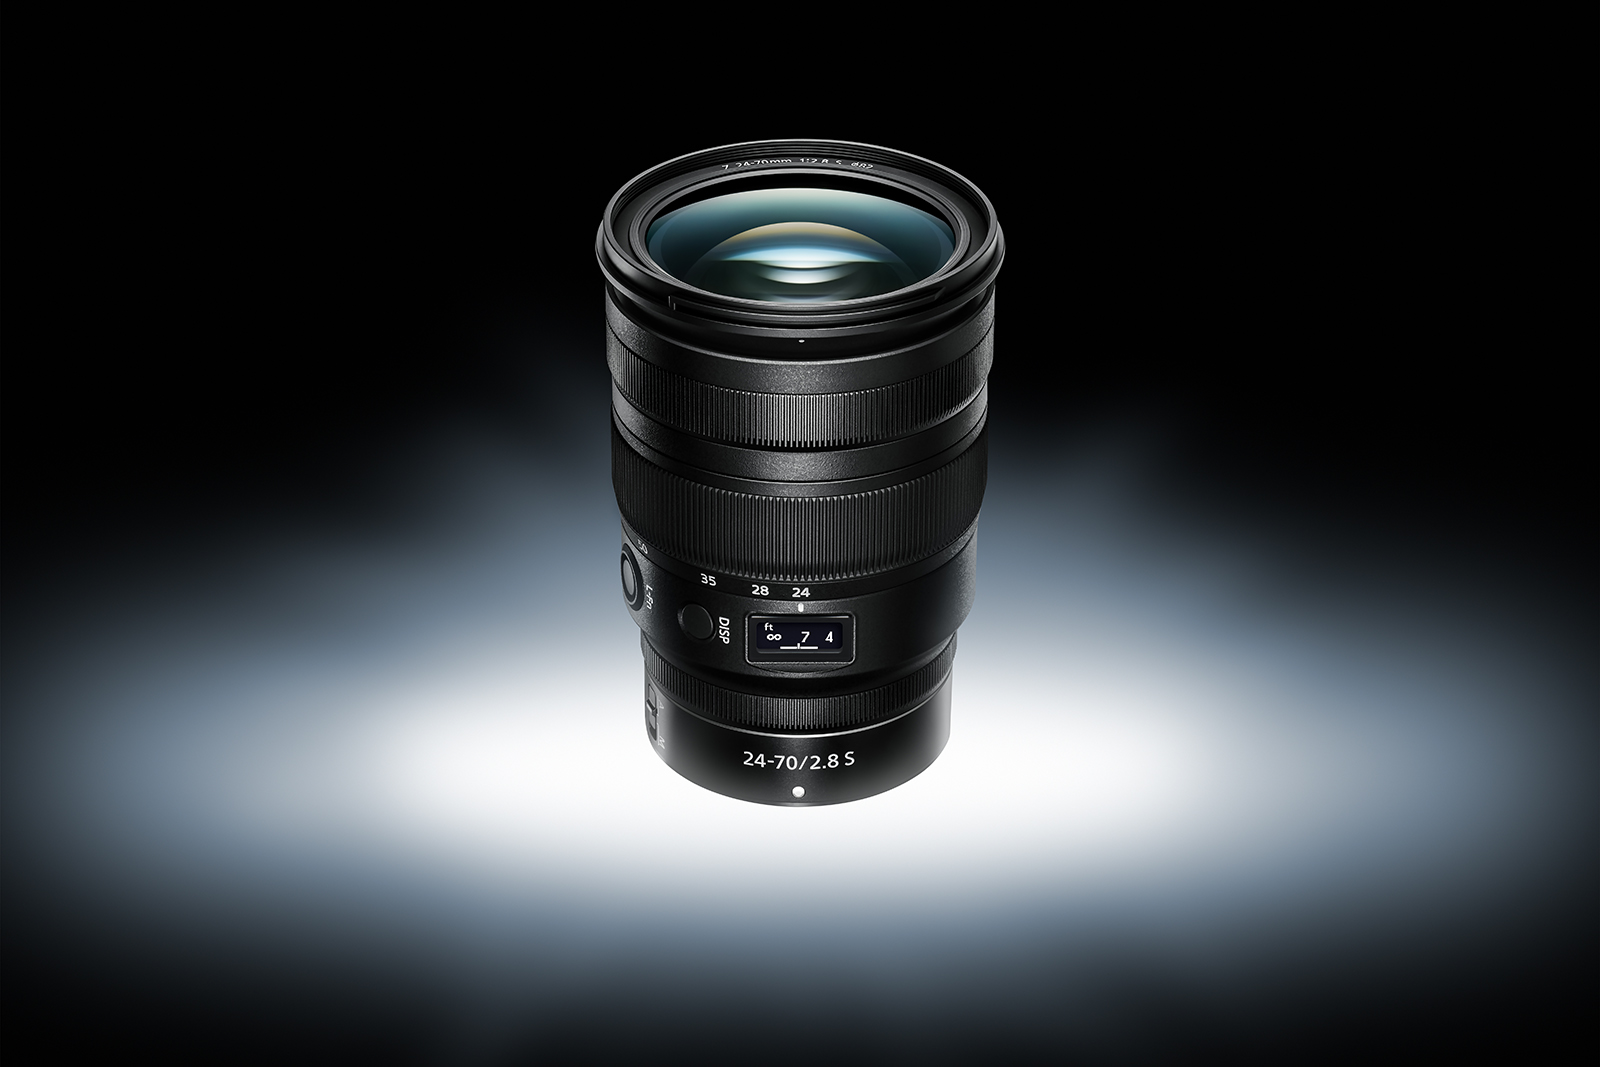 nikon nikkor 24 70mm s lens announced pbs z24 70 f2 8s lcd